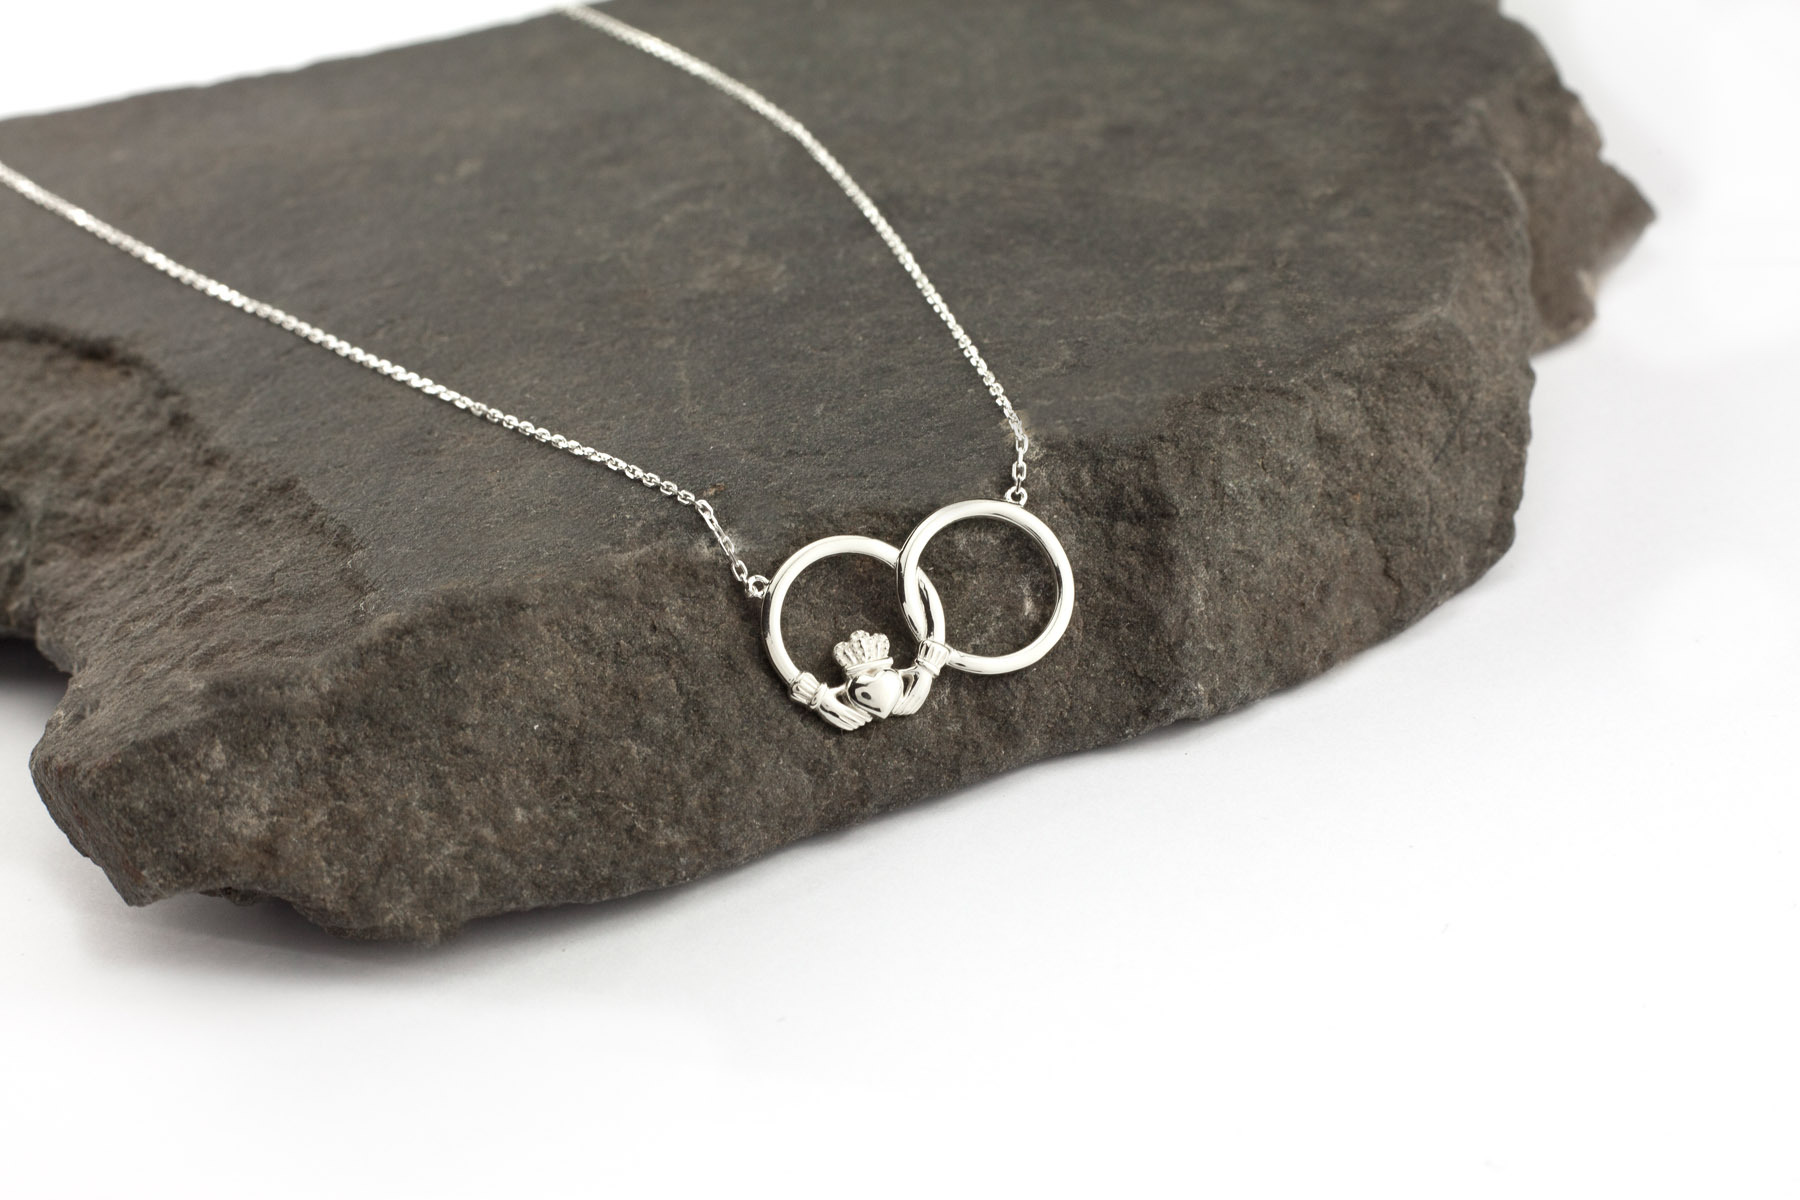 8 inch Round Double Loop Bangle Bracelet with a Trinity Irish Knot charm.